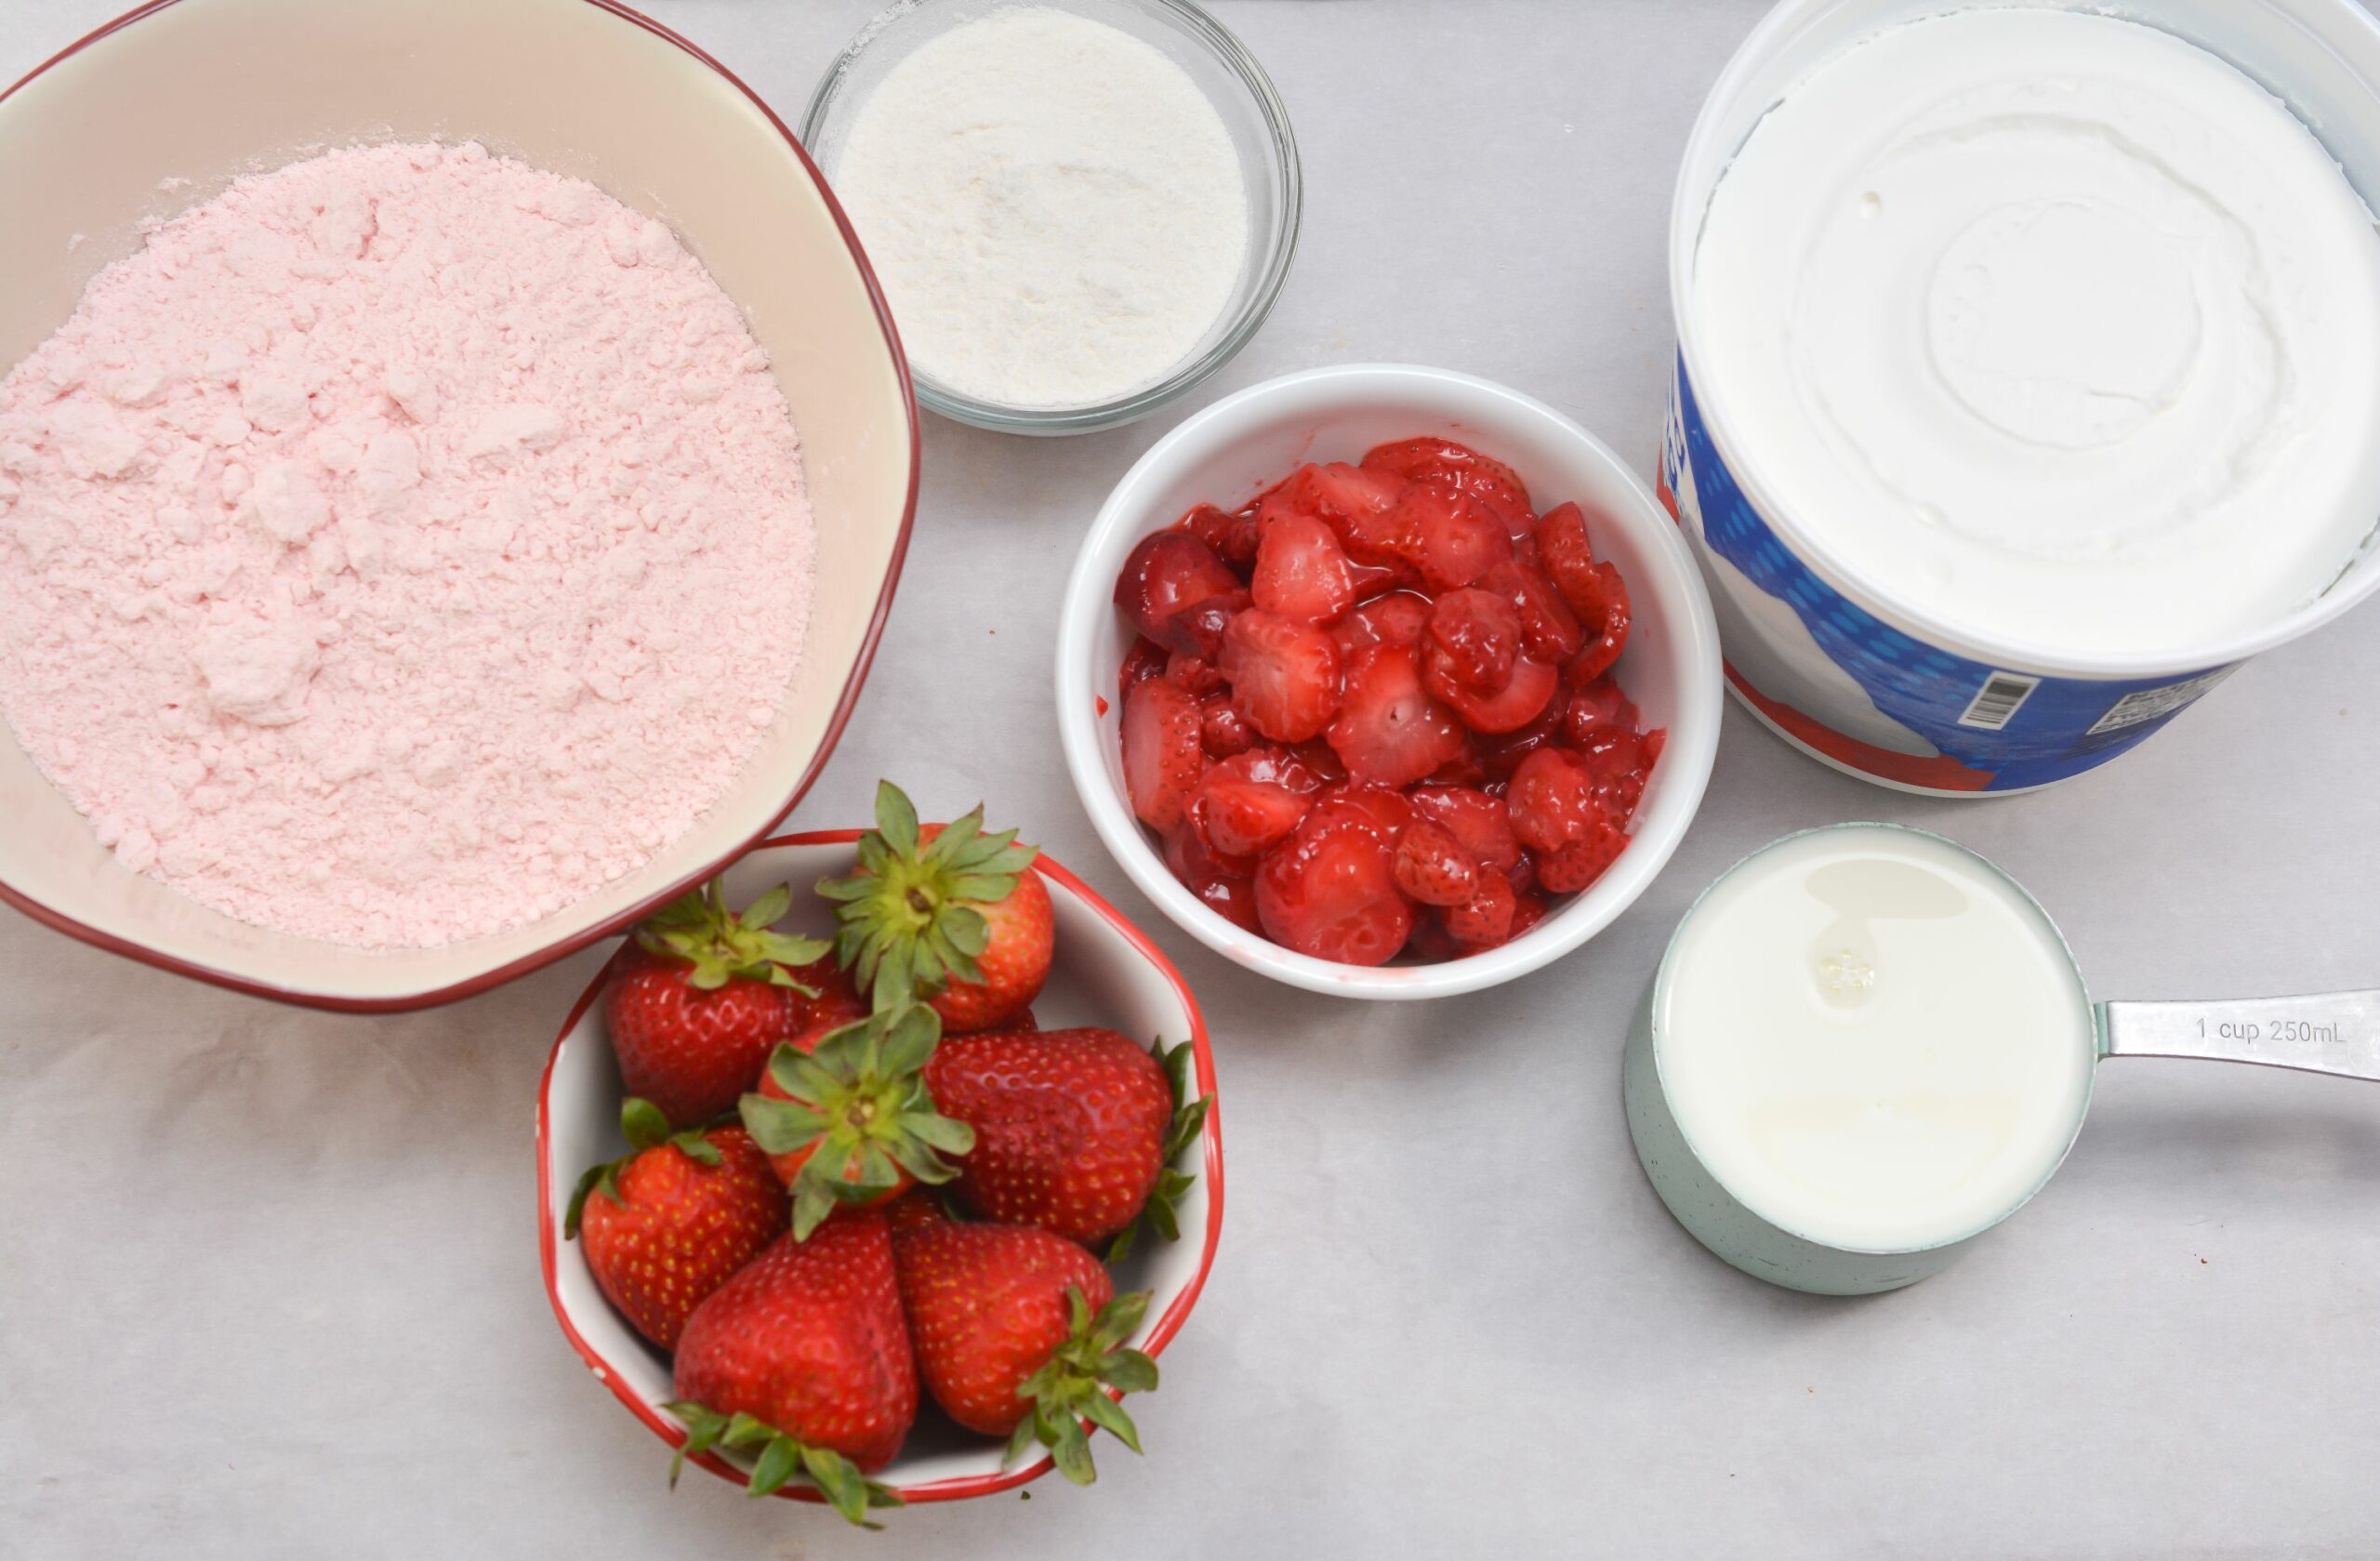 Cake mix, strawberries and cake mixes.